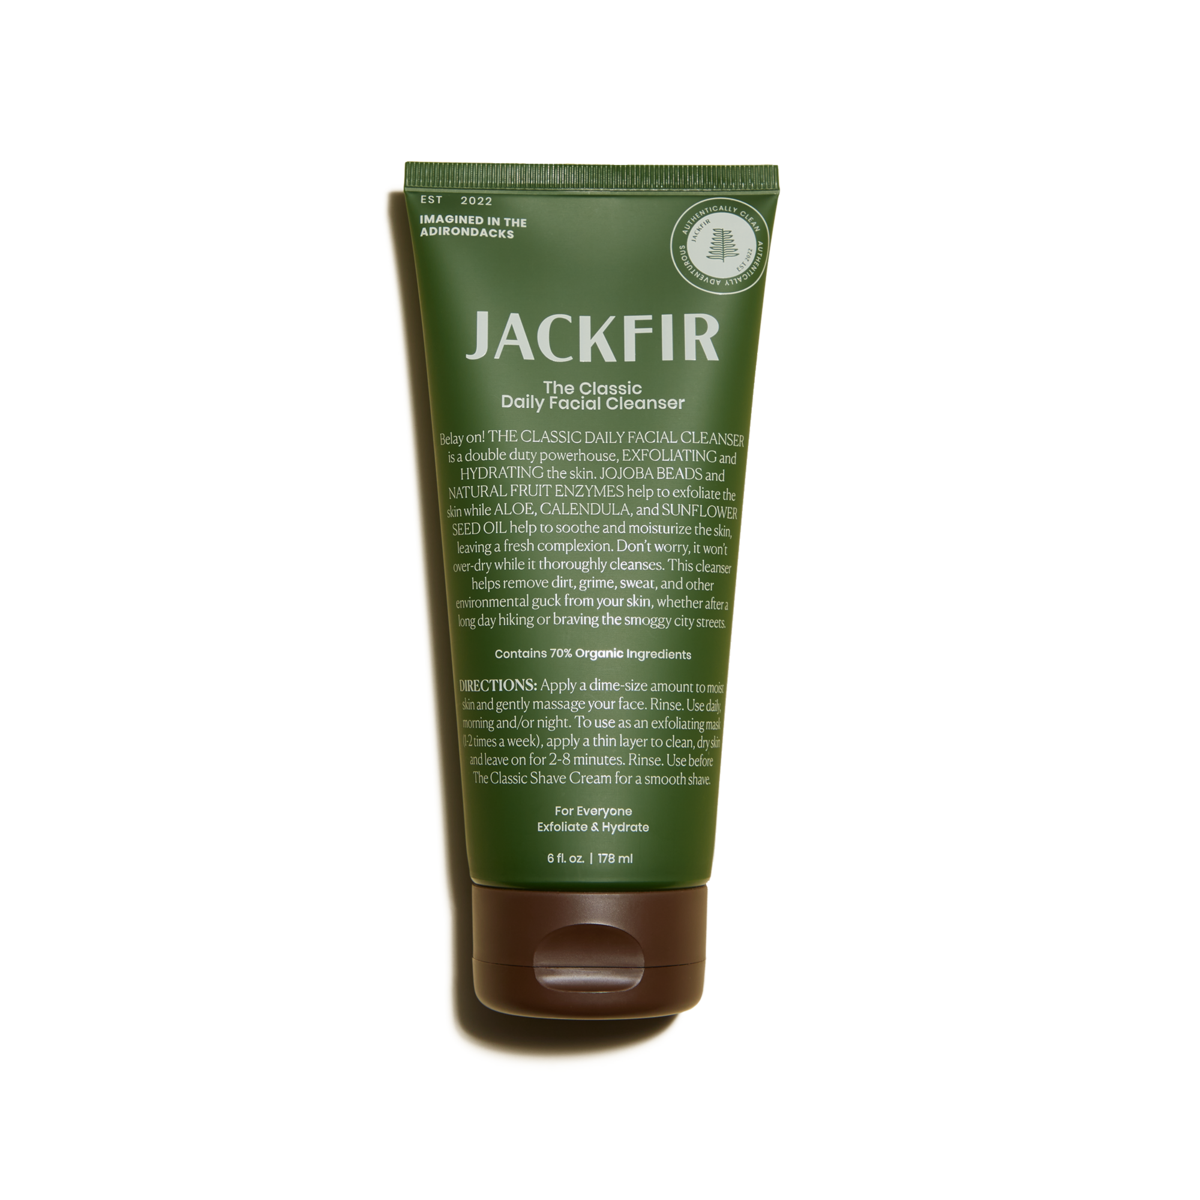 JACKFIR The Classic Daily Facial Cleanser